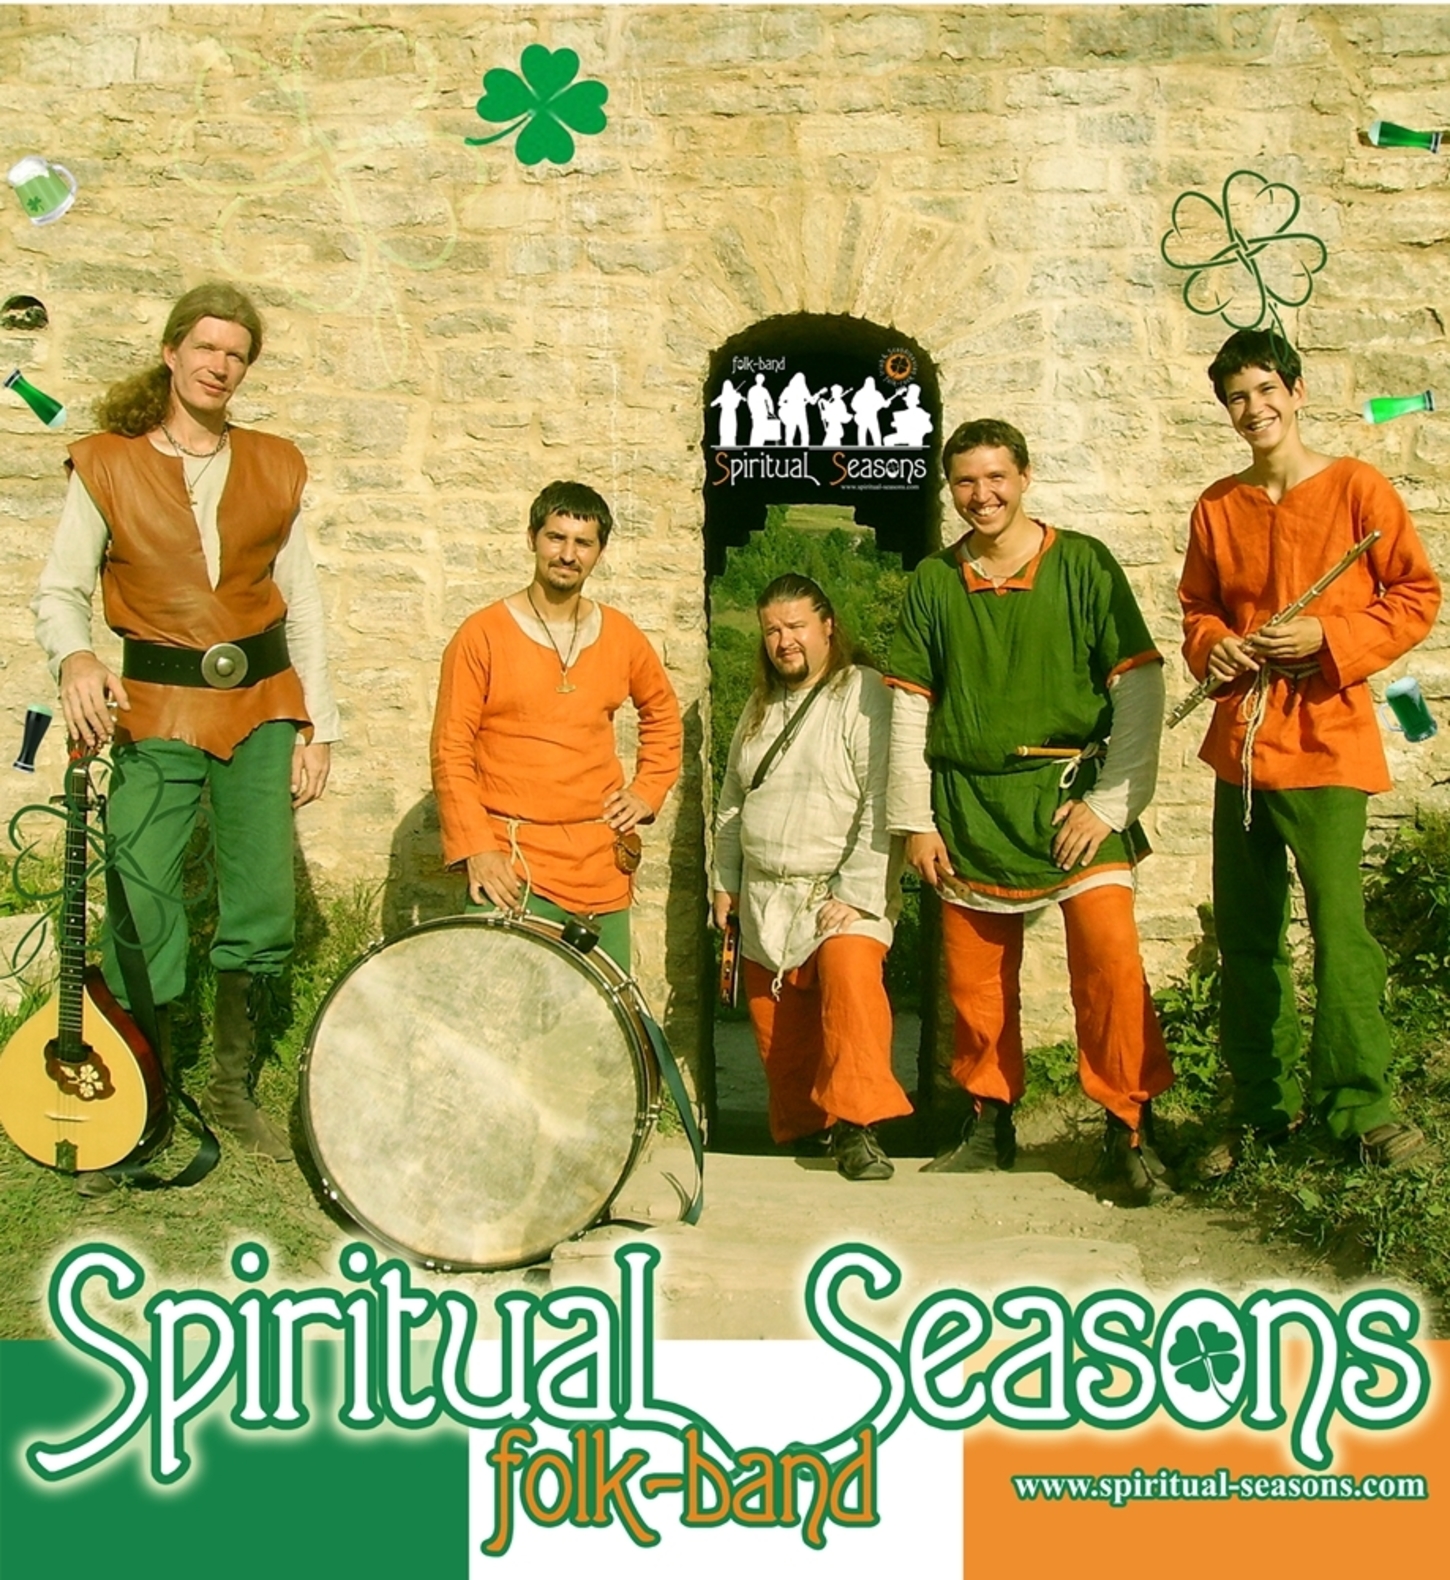 Spirit seasons. Spiritual группа. Спиритуал Сизонс. Spiritual Seasons логотип.